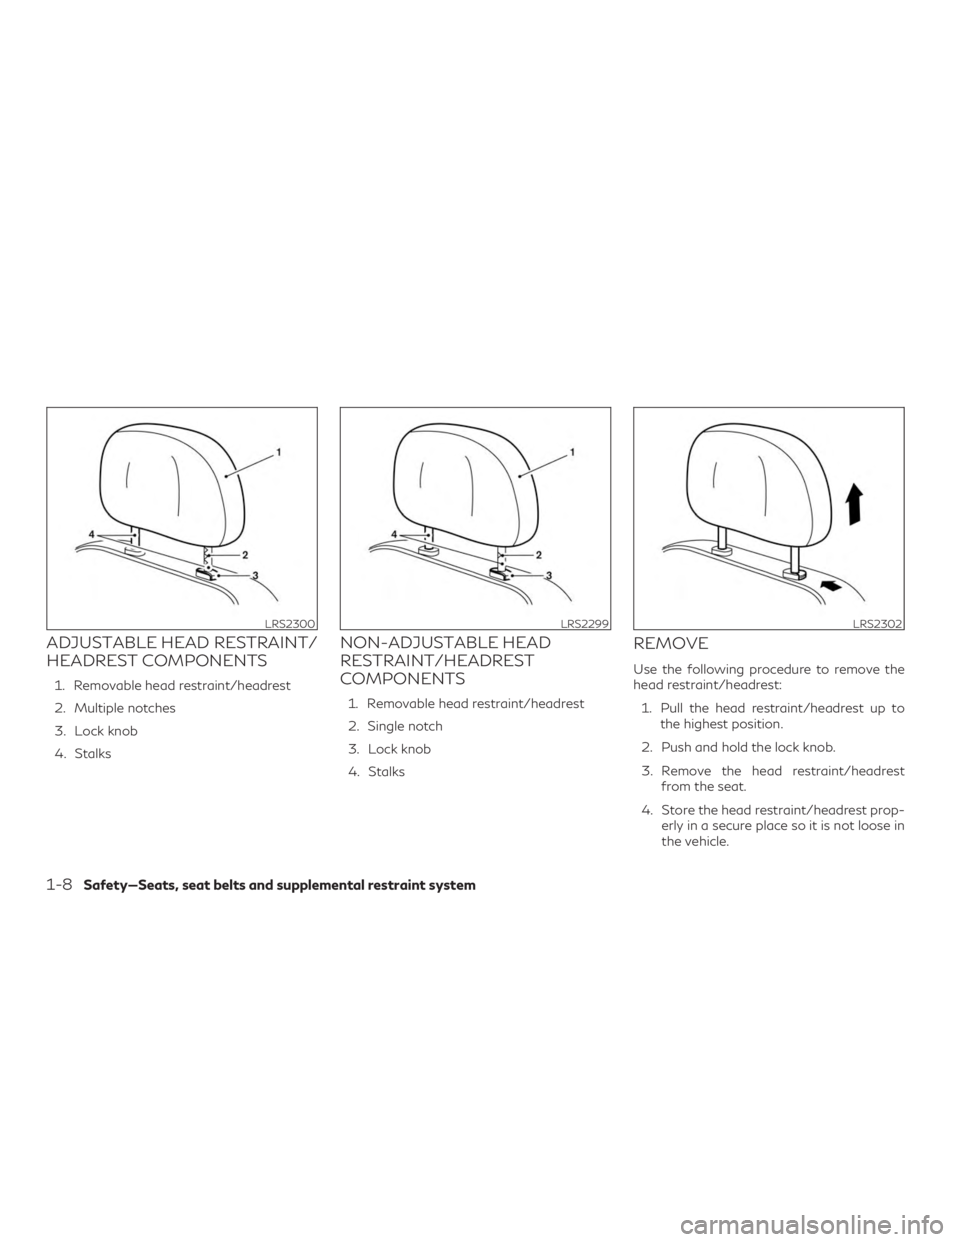 INFINITI QX50 2019 User Guide ADJUSTABLE HEAD RESTRAINT/
HEADREST COMPONENTS
1. Removable head restraint/headrest
2. Multiple notches
3. Lock knob
4. Stalks
NON-ADJUSTABLE HEAD
RESTRAINT/HEADREST
COMPONENTS
1. Removable head restr